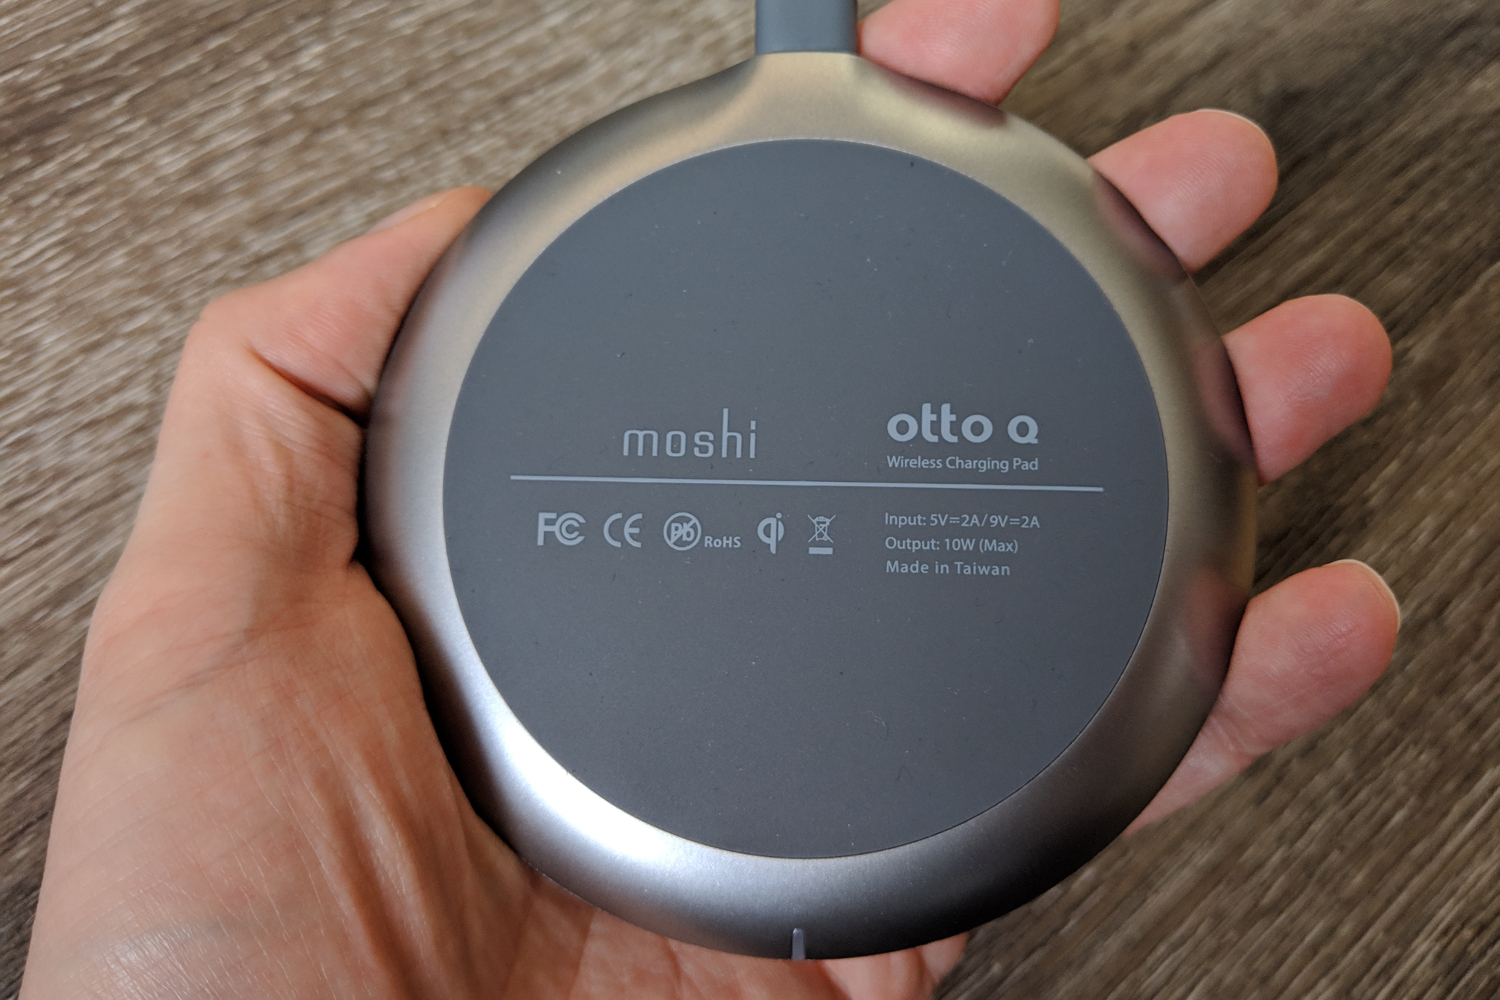 Moshi Otto Q wireless charging pad